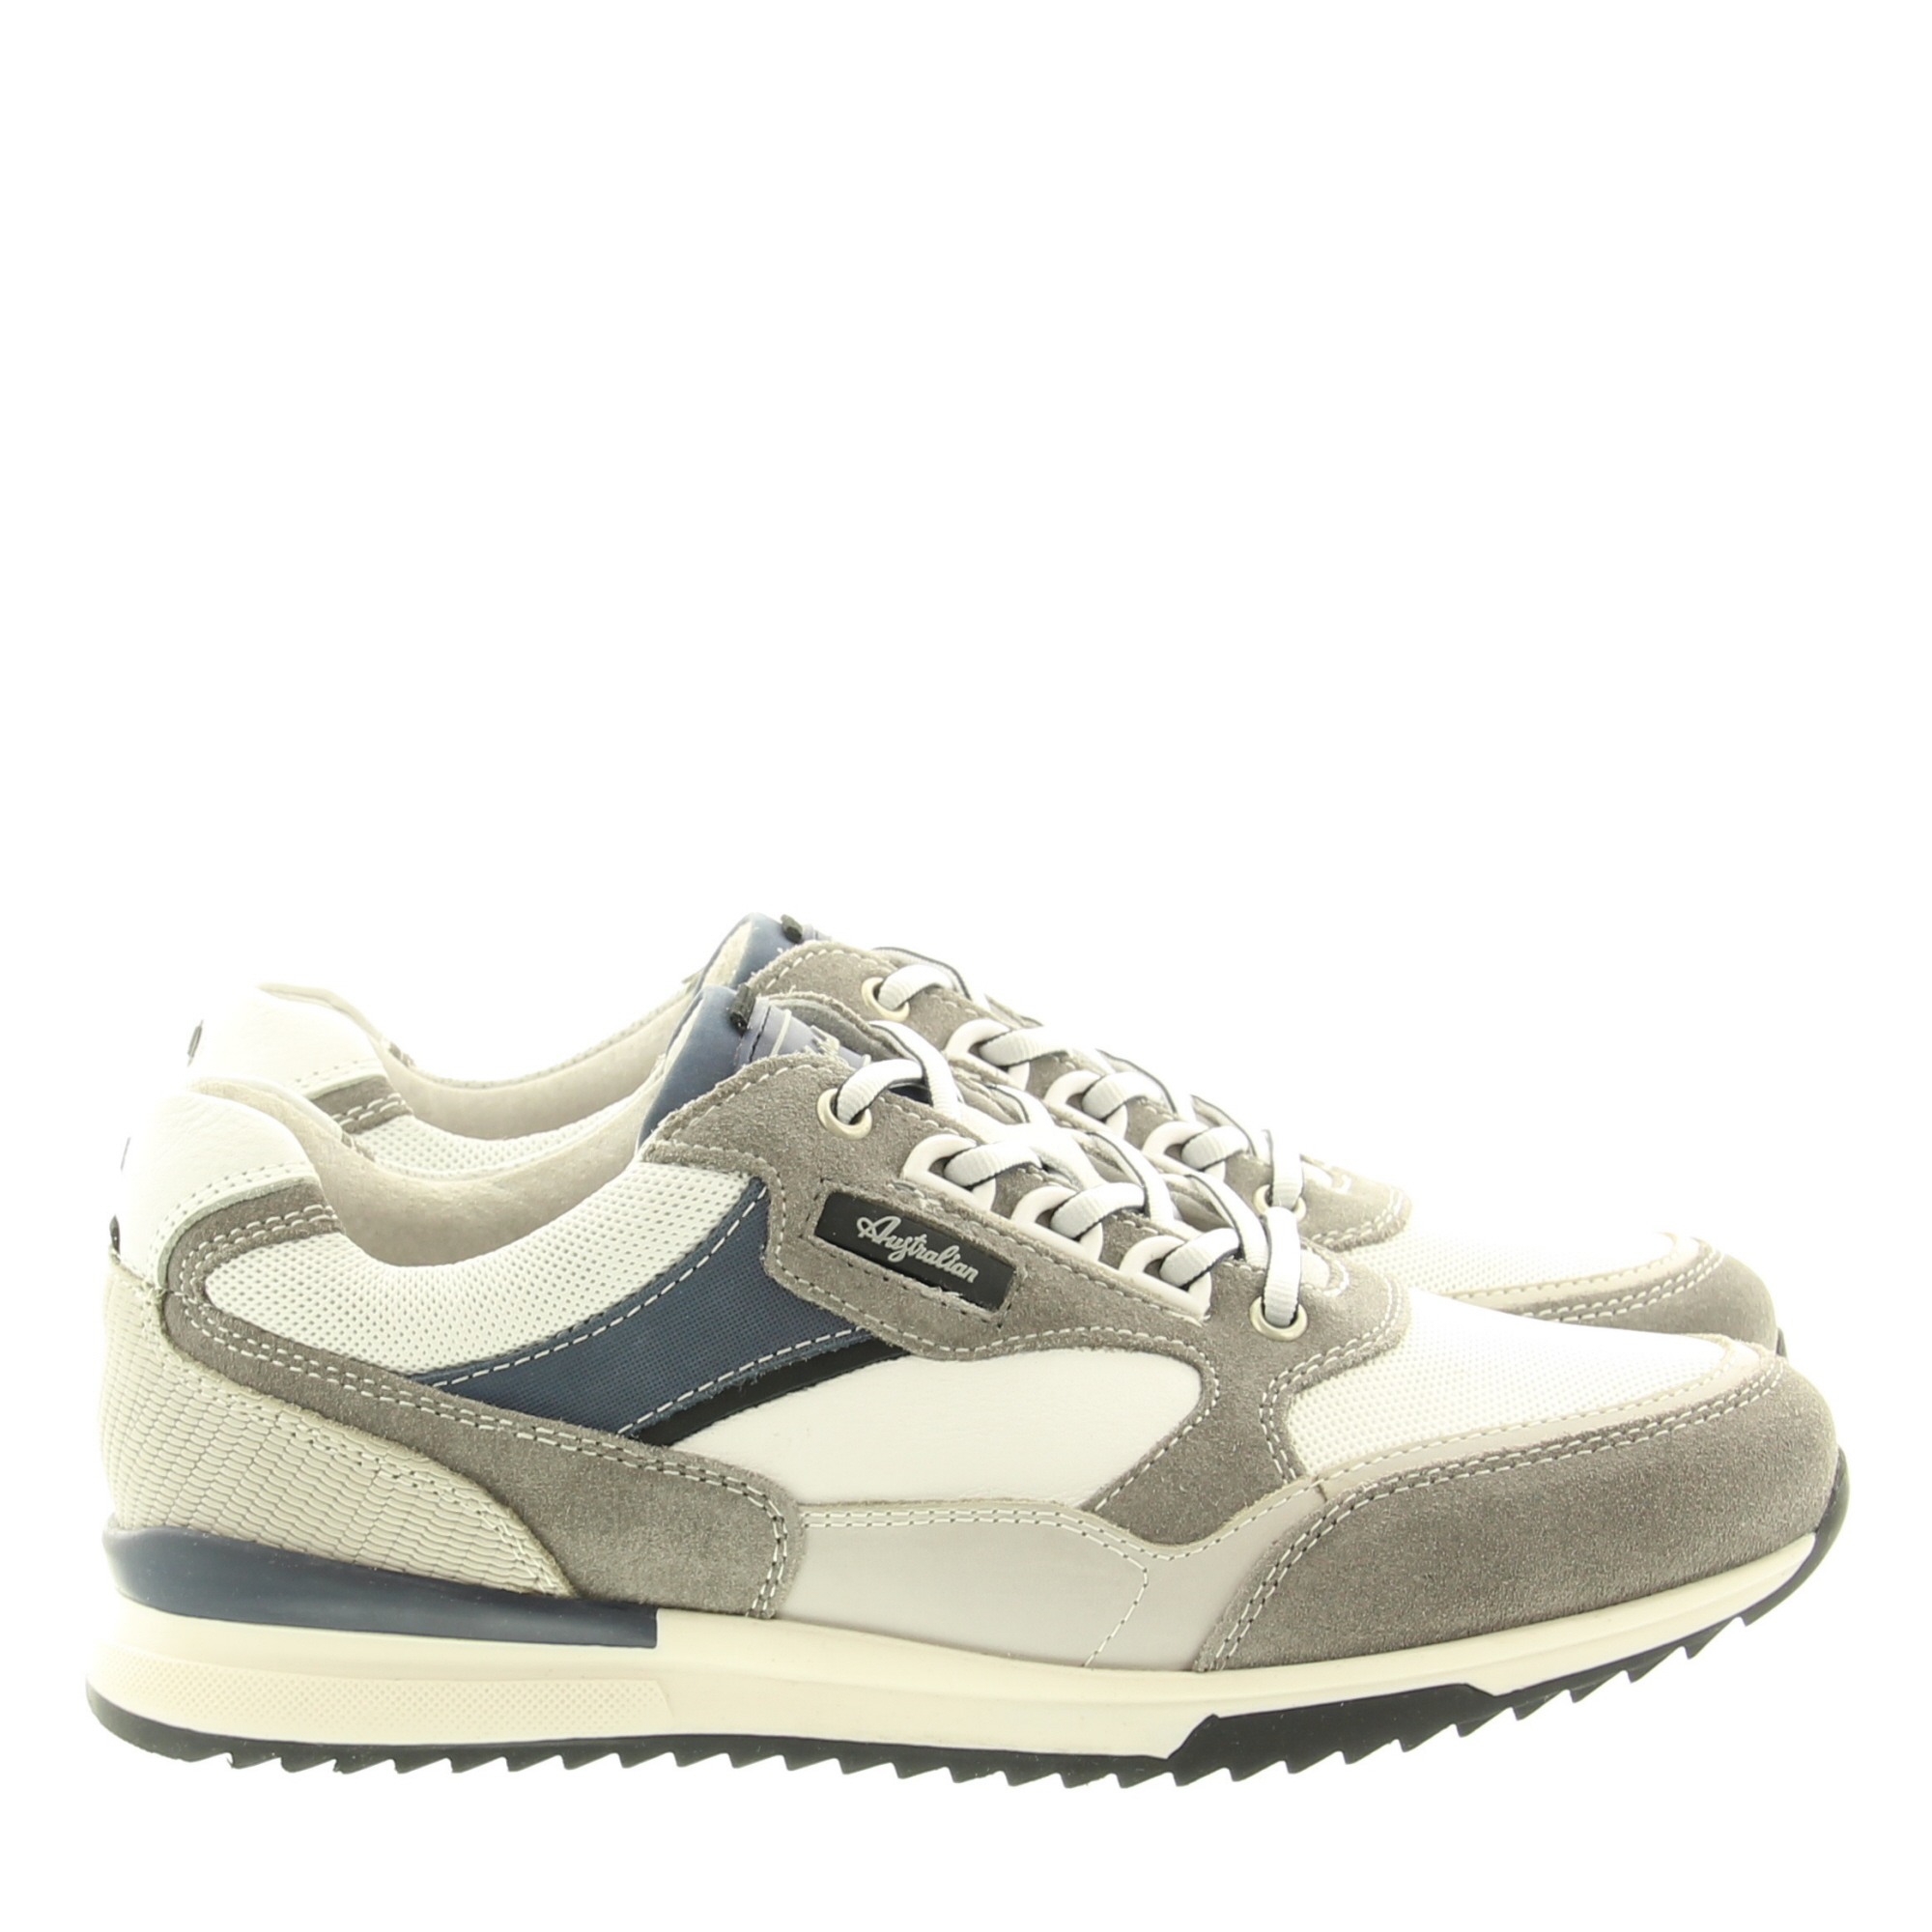 Australian Footwear Roberto 15.1604.01 B5B White Grey Blue